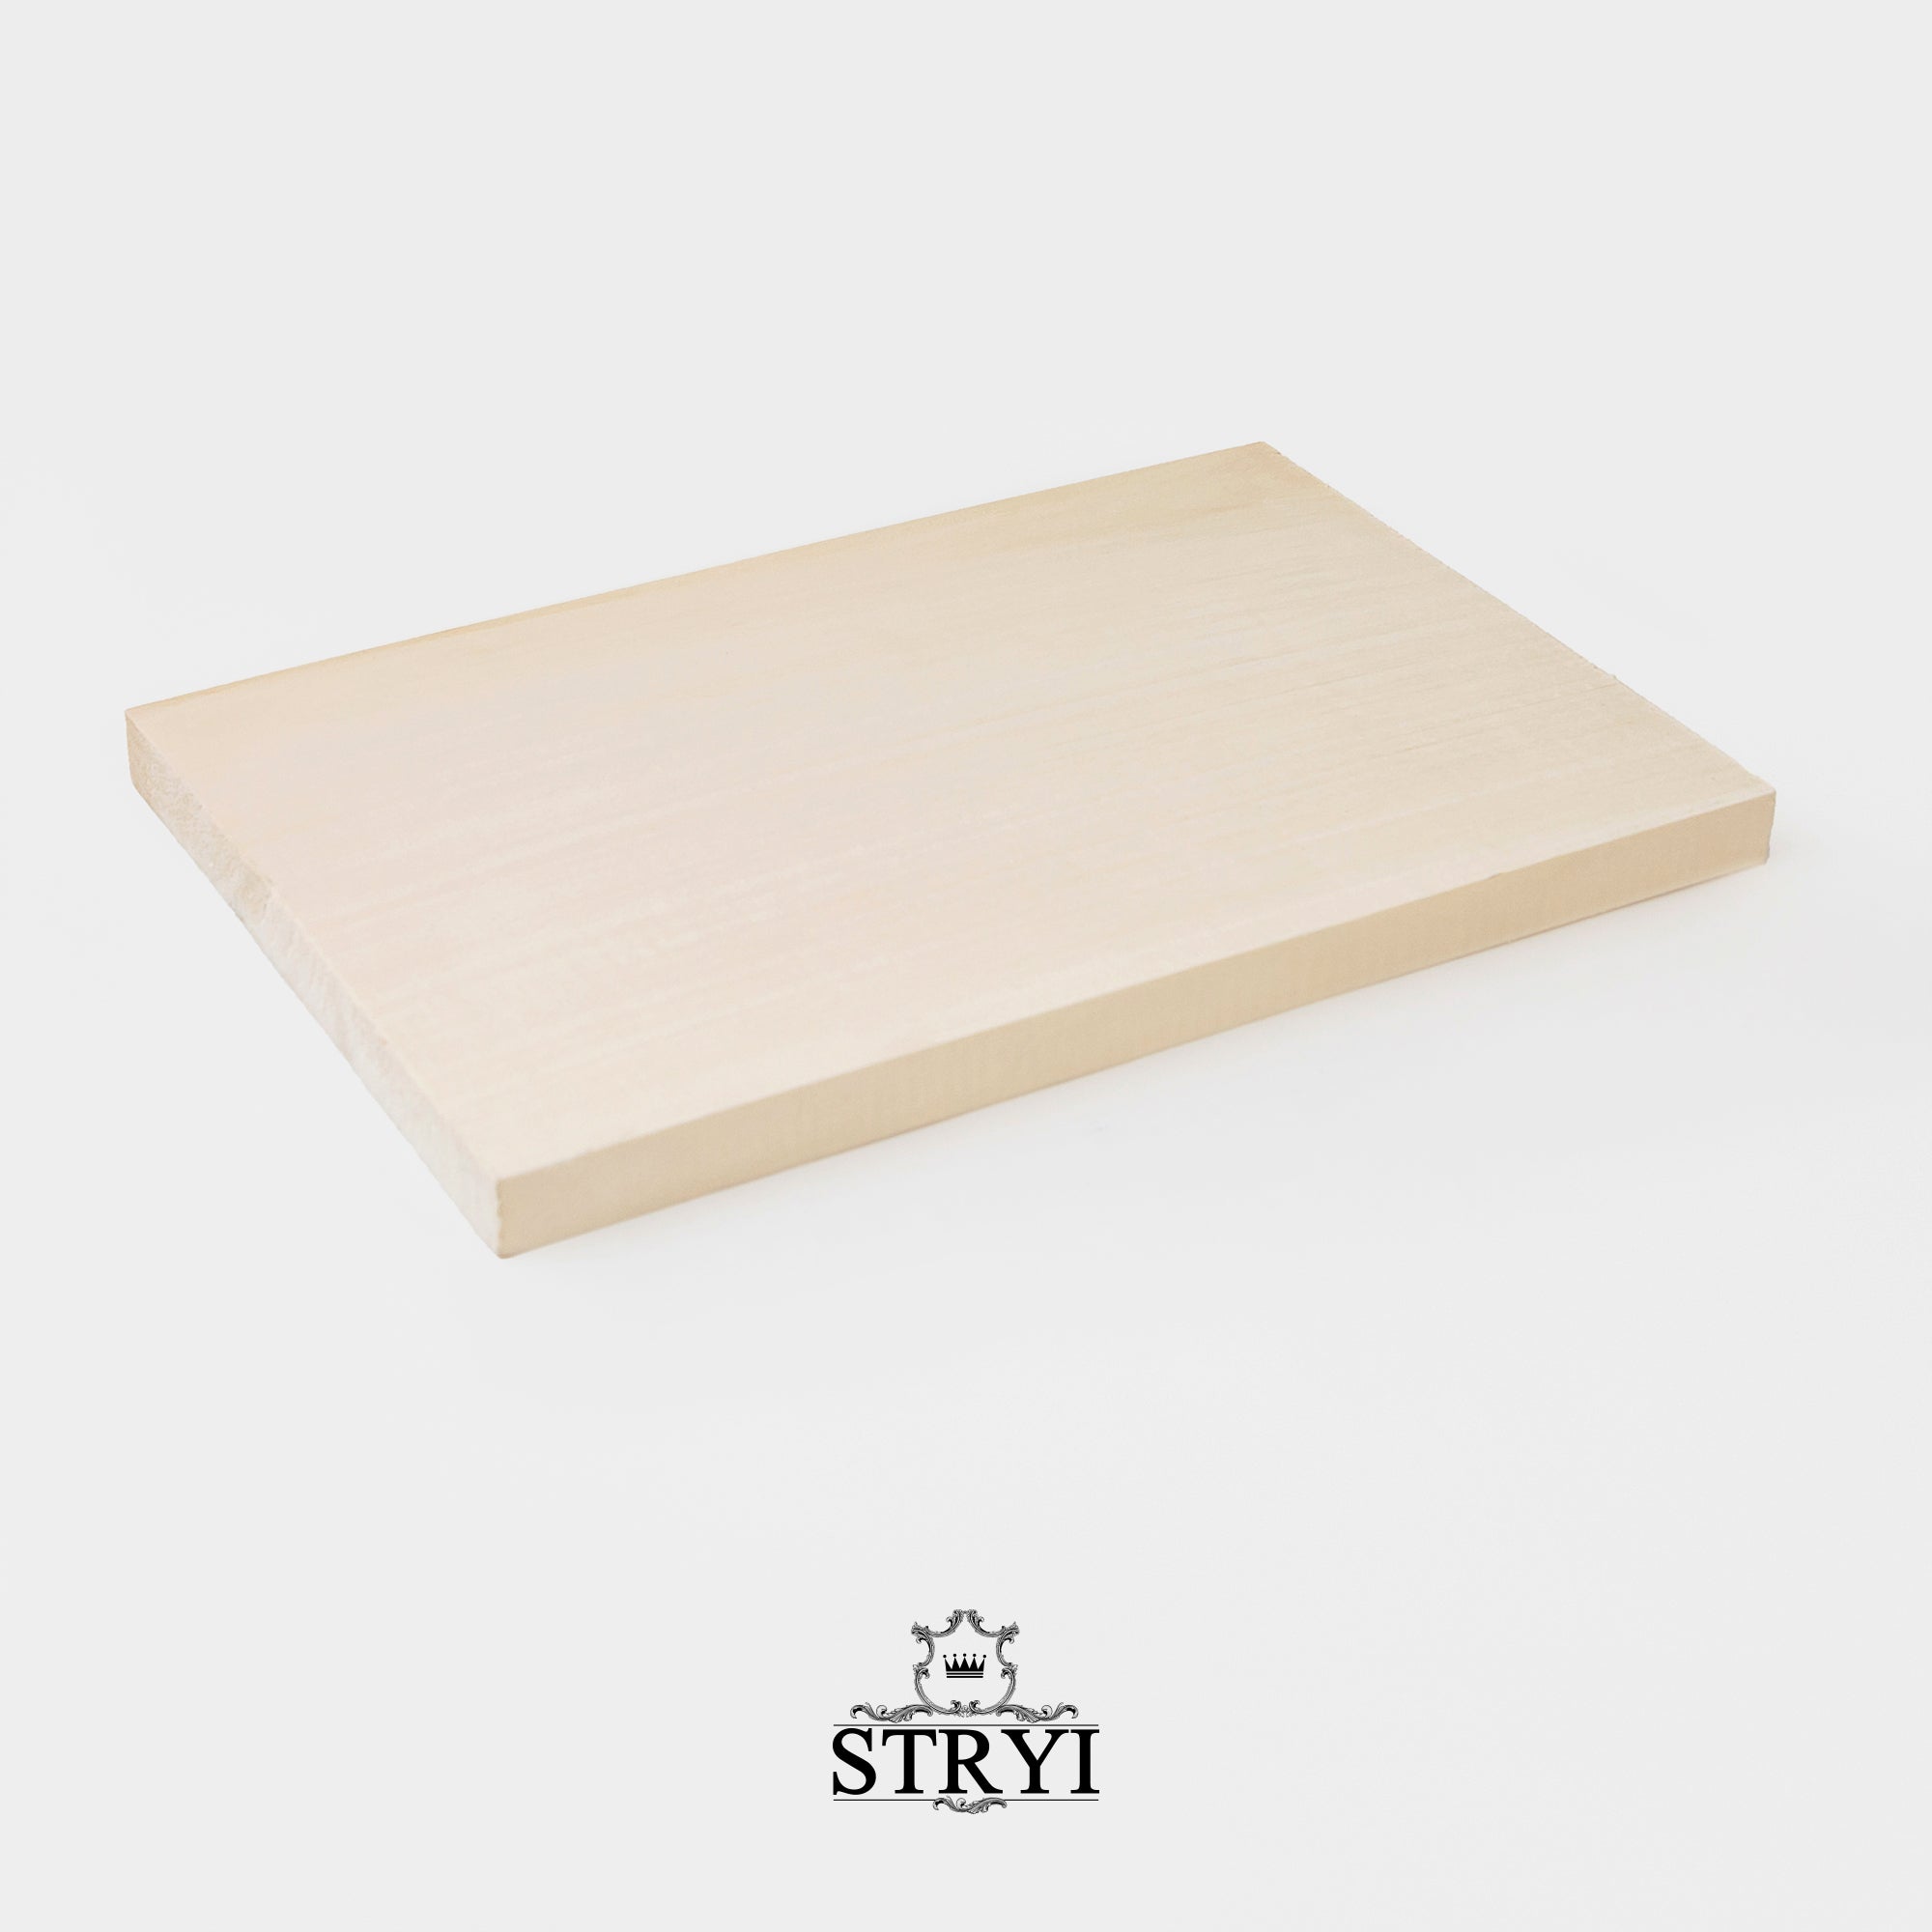 Tablero de tilo para tallar 30*20*2cm, madera en blanco para